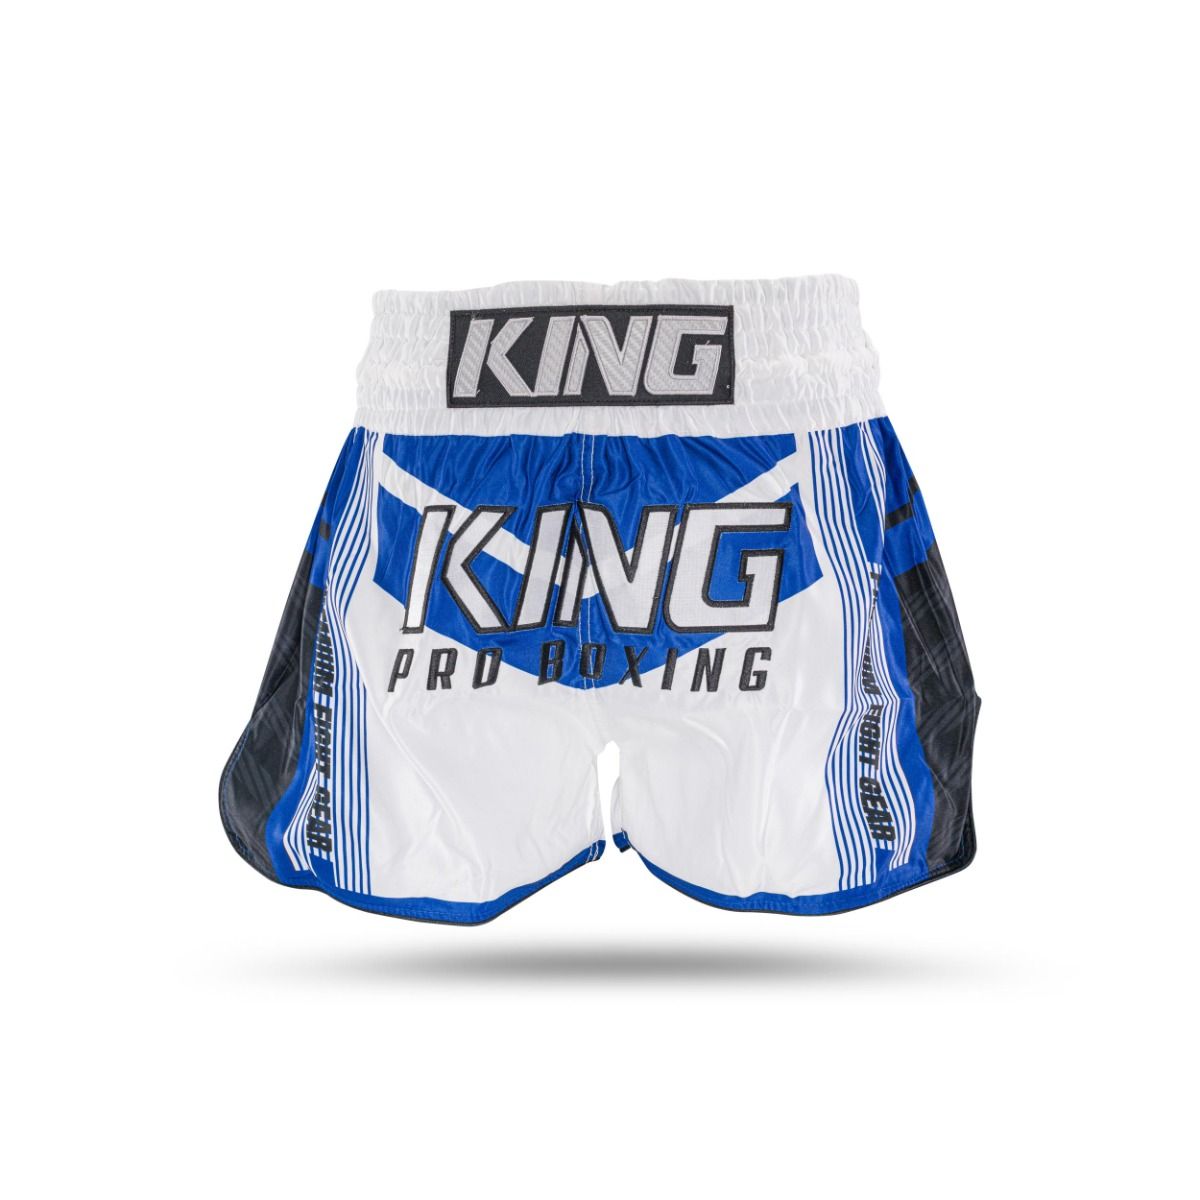 King Pro Boxing - ENDURANCE 8 - short - korte broek - Wit - blauw - white - blue 